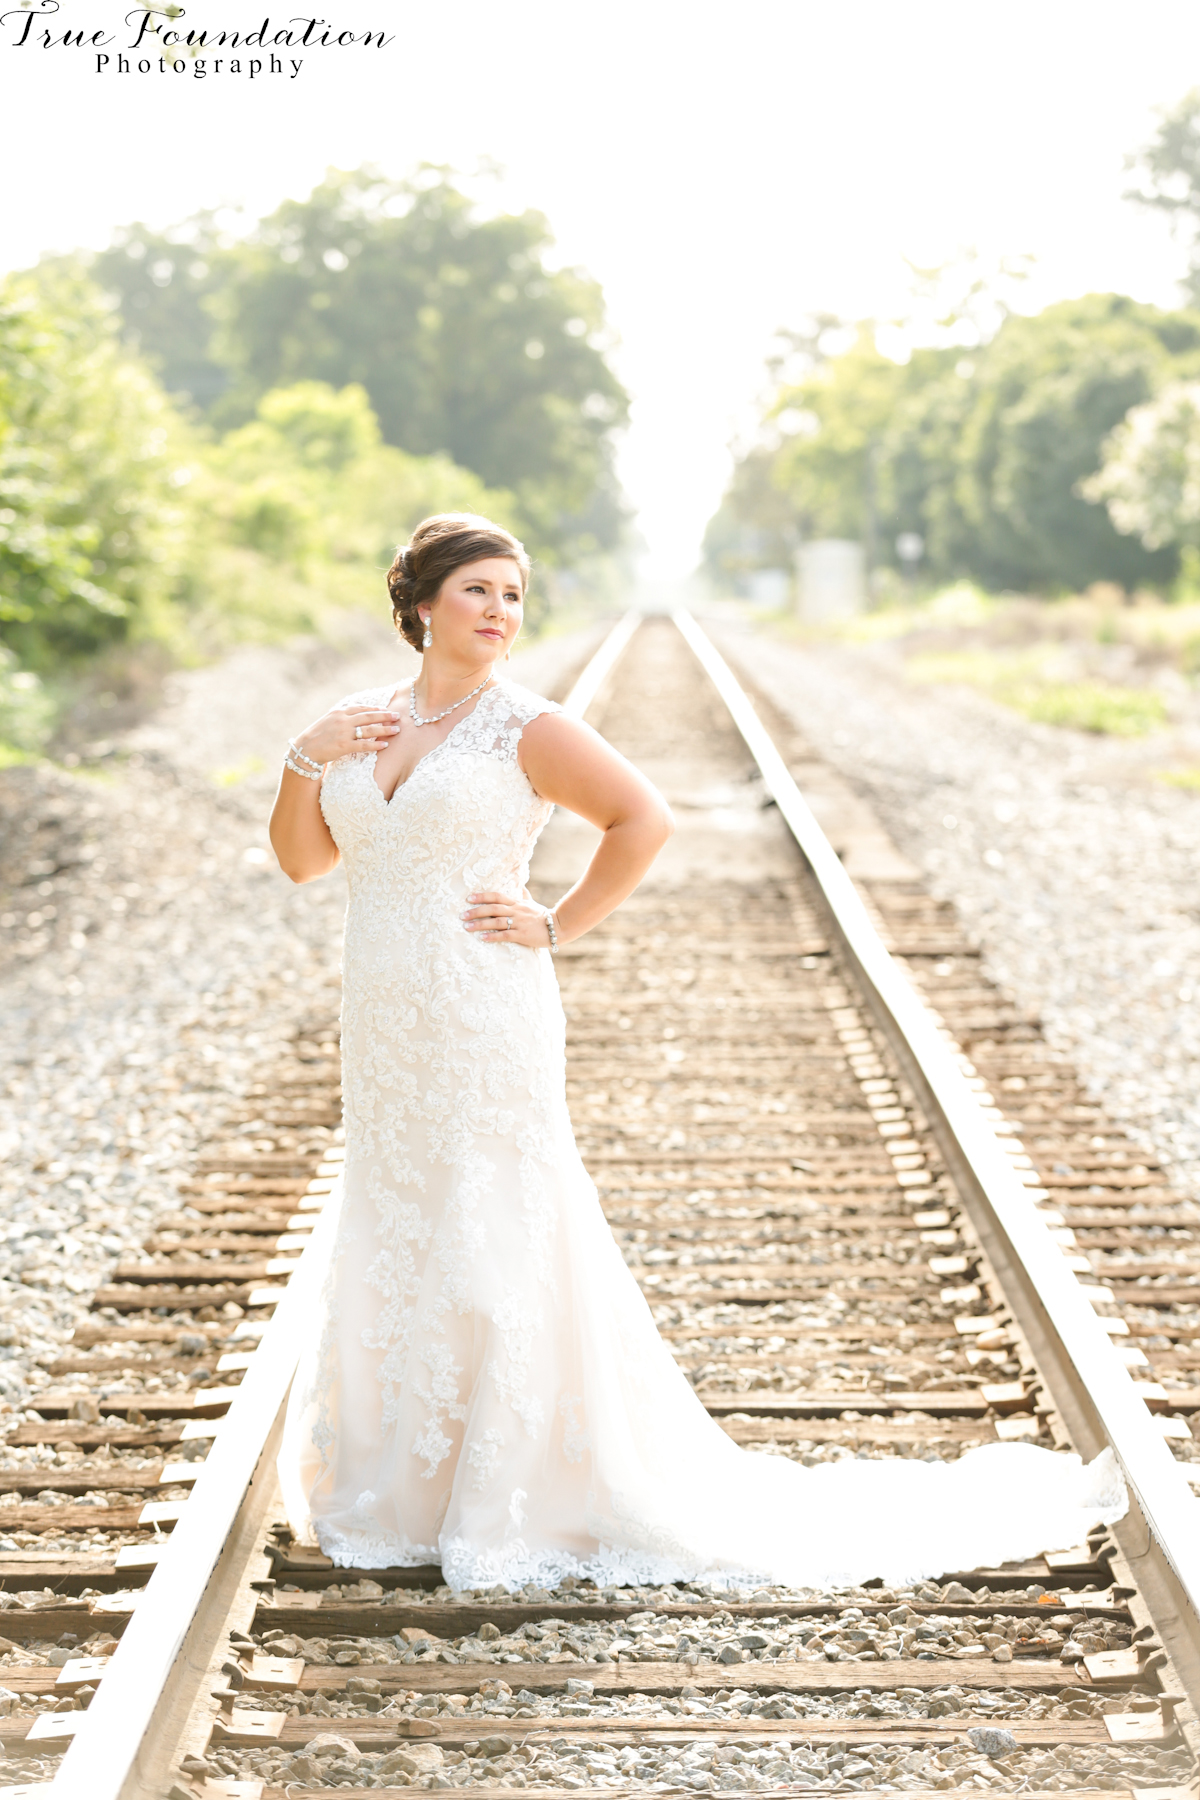 Bridal - Portrait - Photography - Photos - Hendersonville - NC - Shelby - Photographers - Farm - Country - Pinterest - Bride (31)